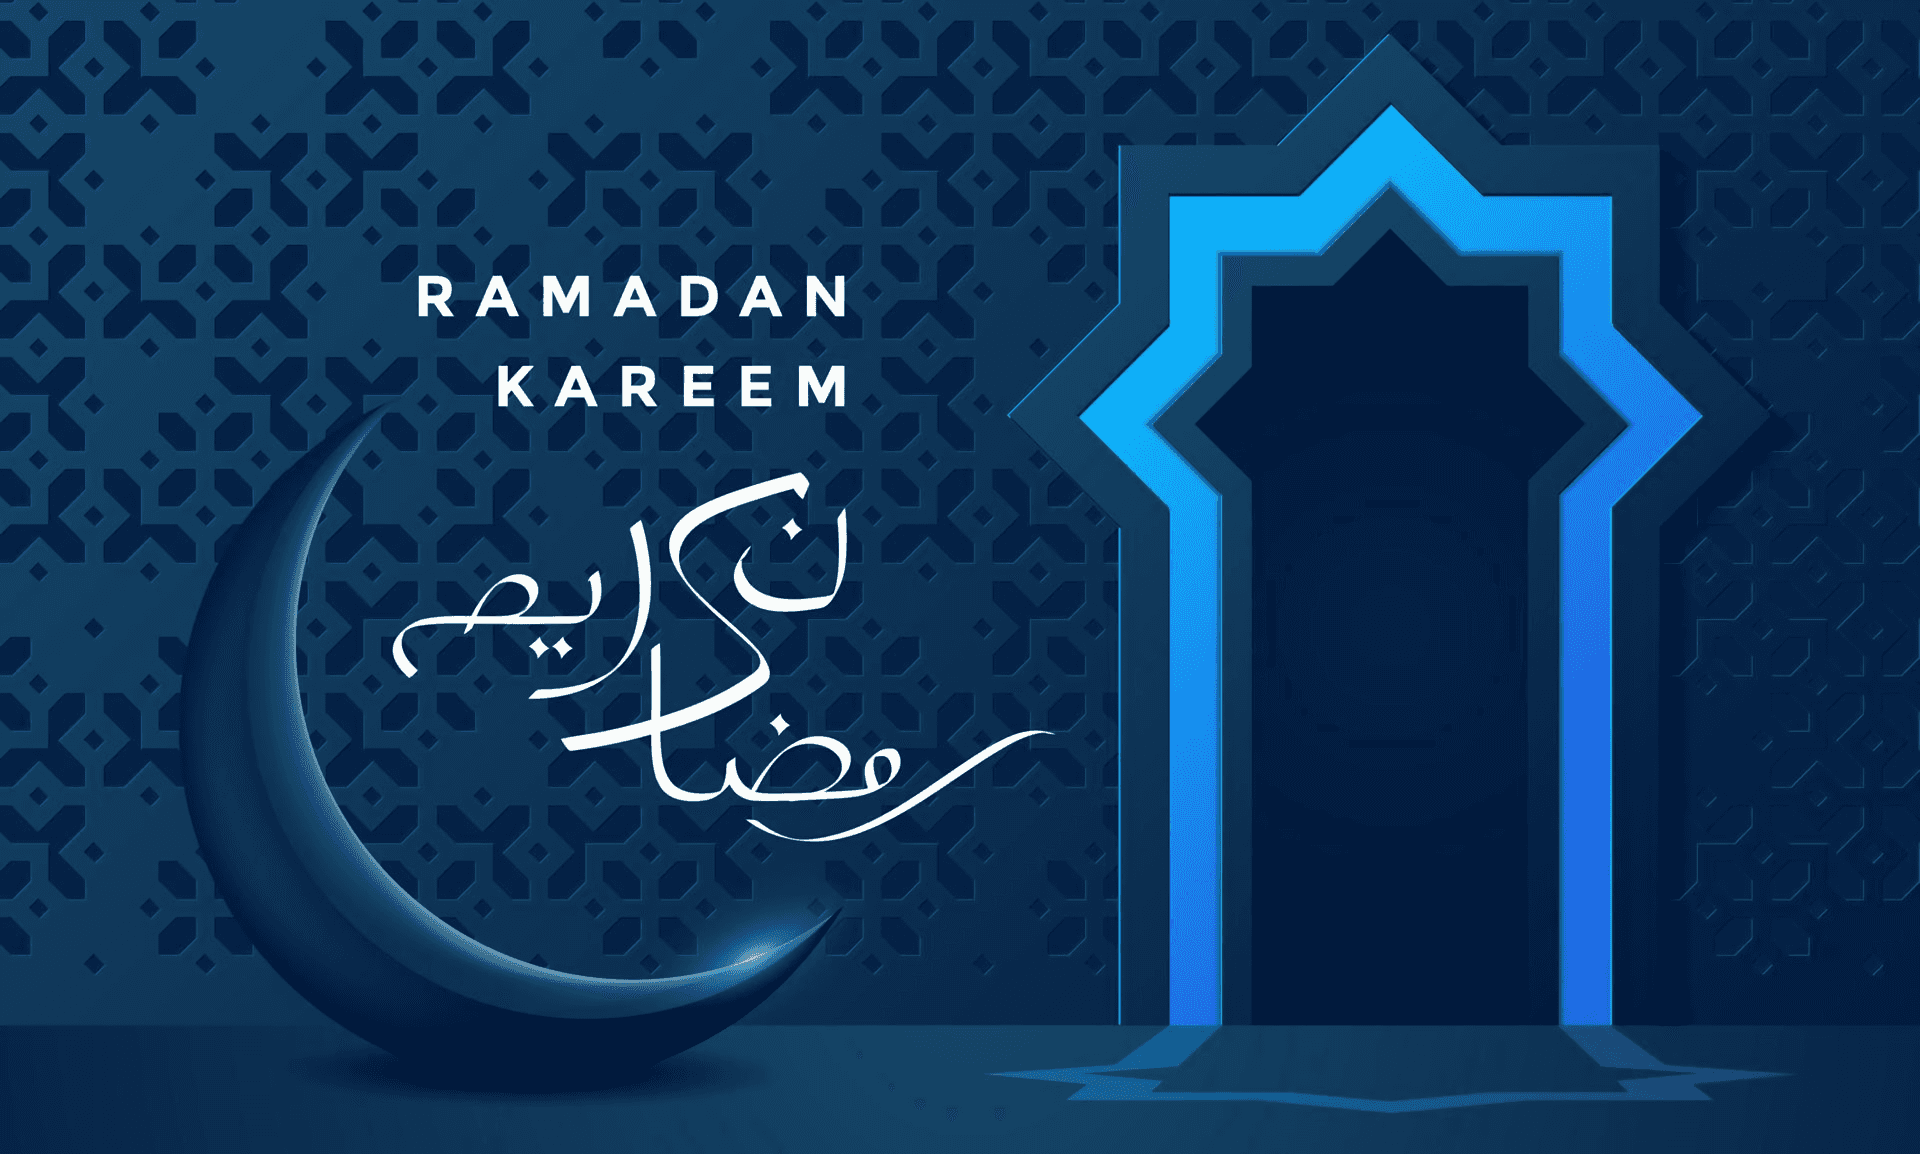 Ramadan Kareem With A Crescent And A Moon